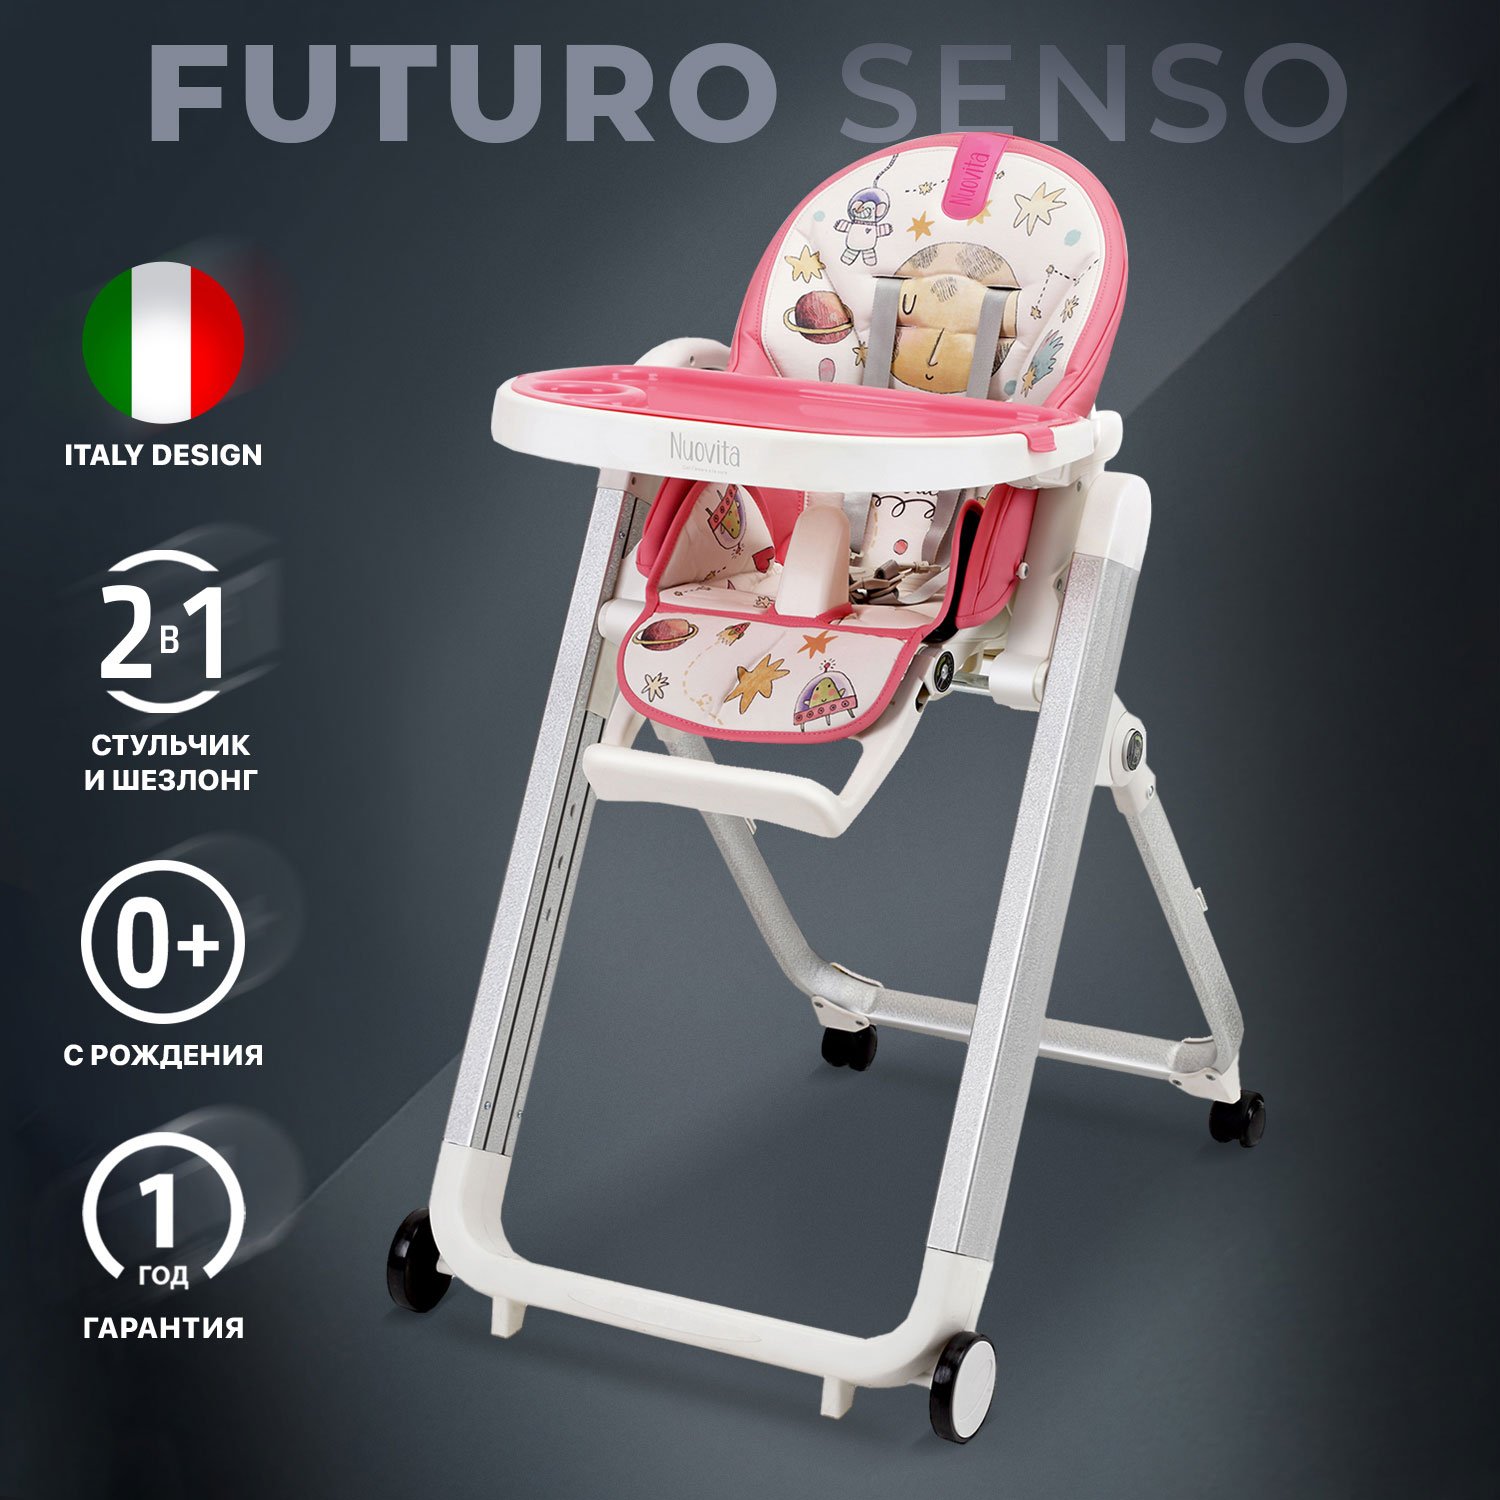 Стульчик для кормления Nuovita Futuro Senso Bianco (Cosmo rosa/Розовый космос) стульчик для кормления nuovita grande cosmo giallo желтый космос